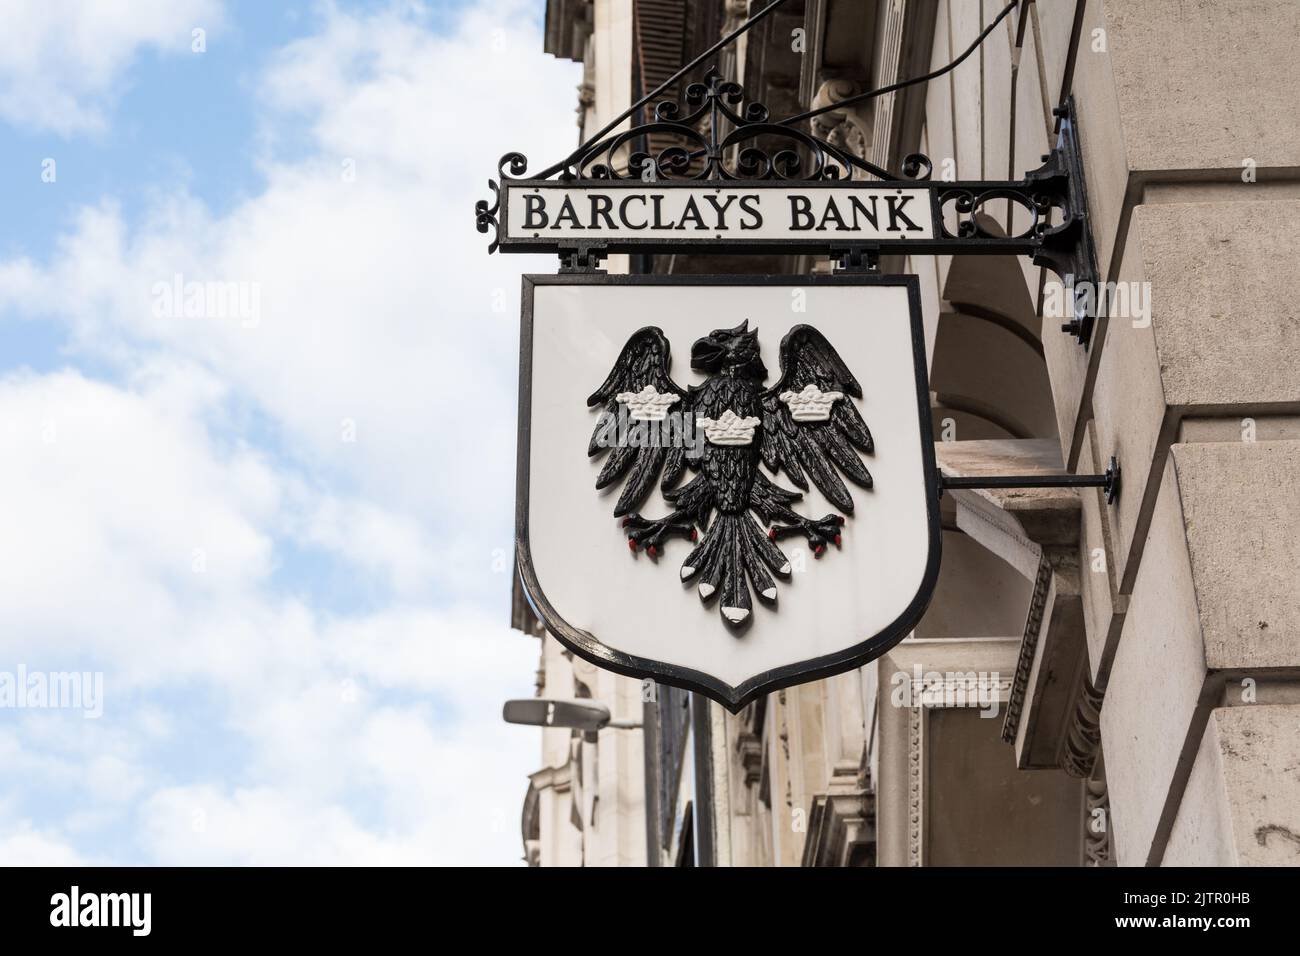 Barclays Bank signage, Fleet Street, Temple, London, EC4, England, UK Stock Photo